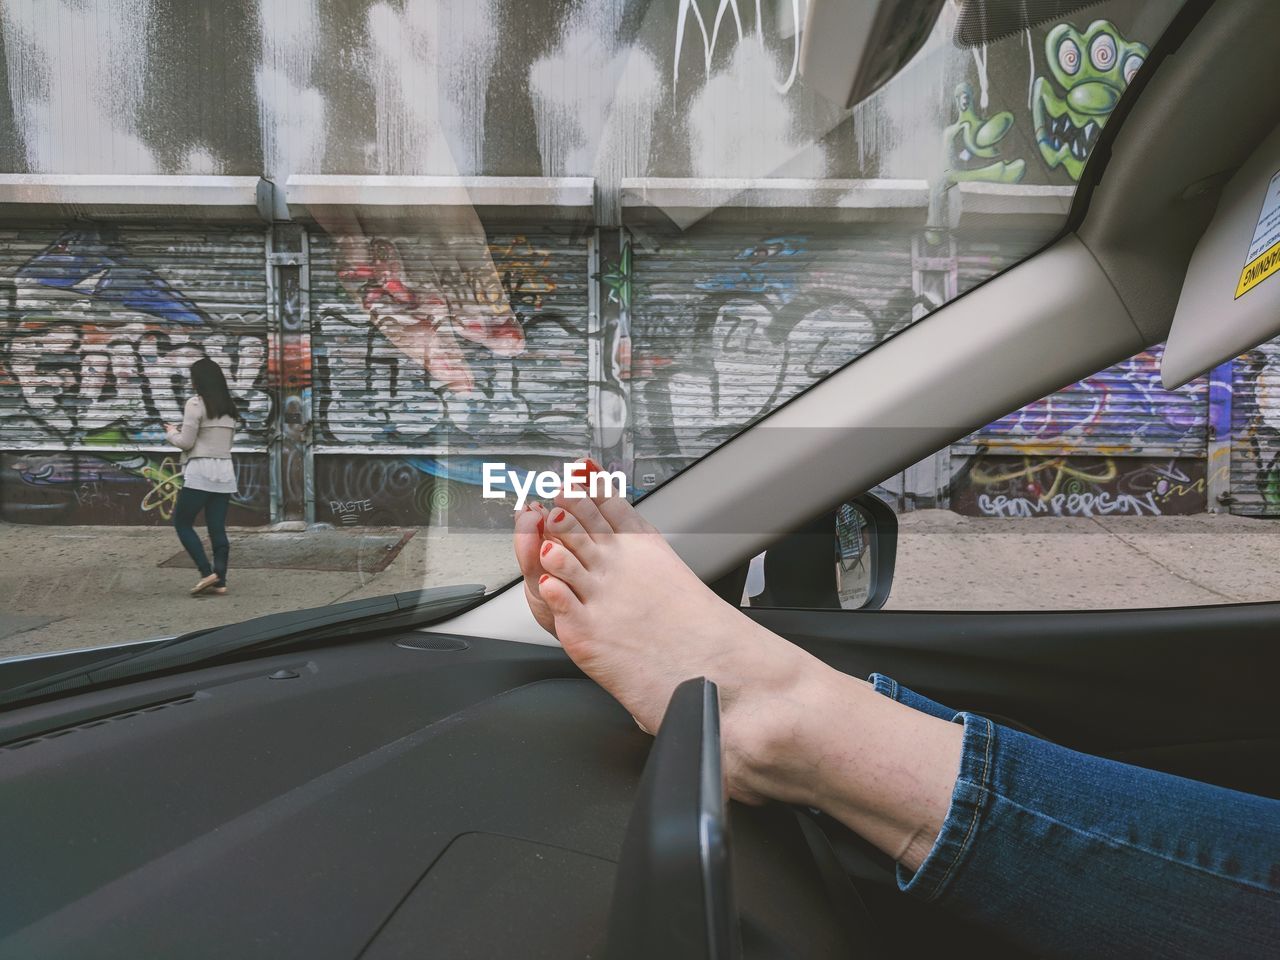 Woman feet in car dashboard